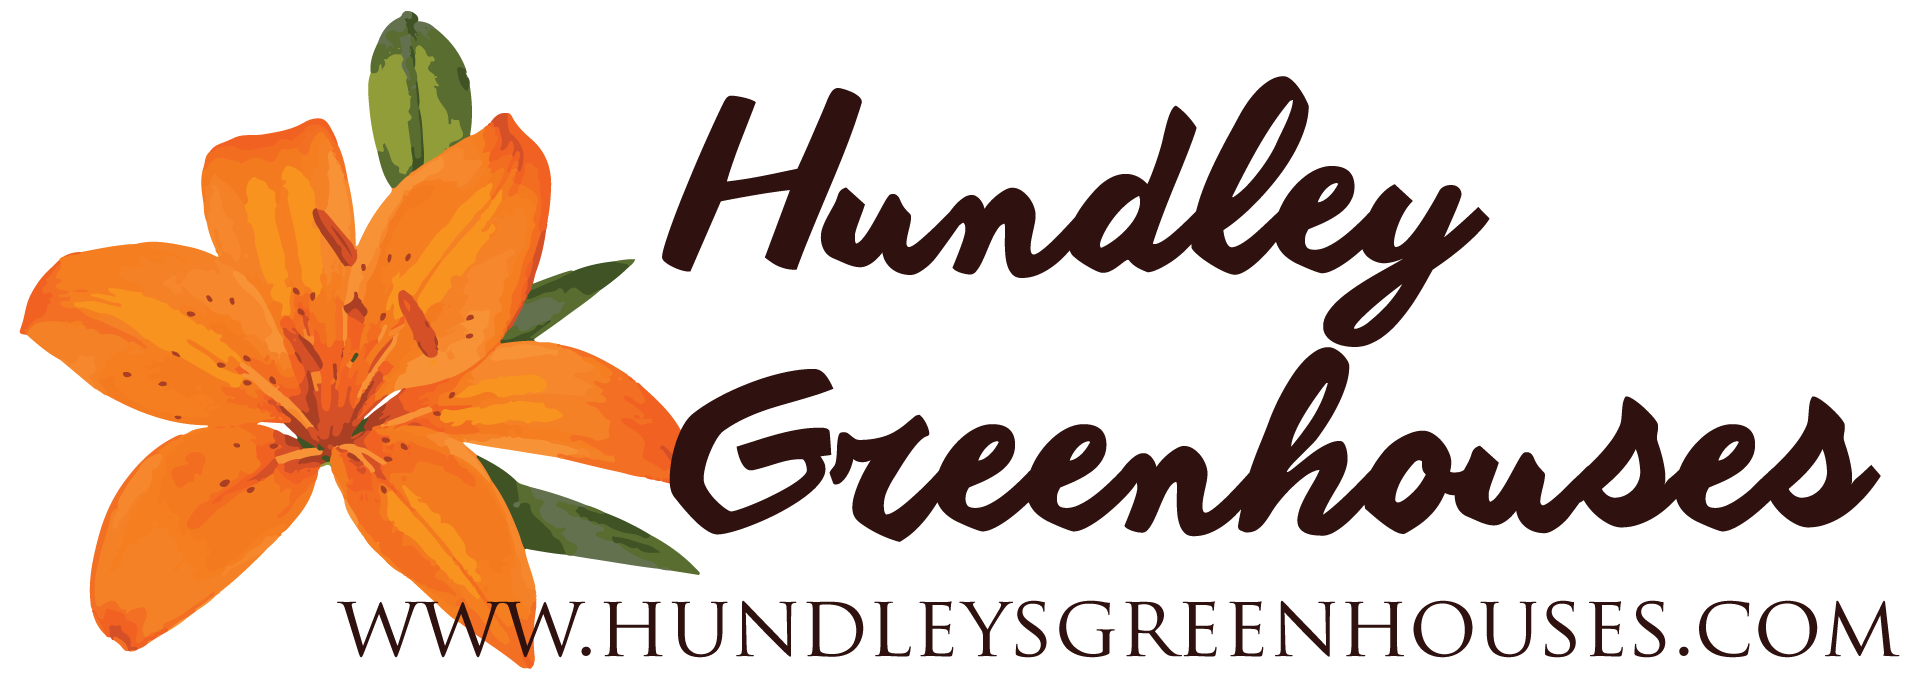 Hundley's Greenhouses